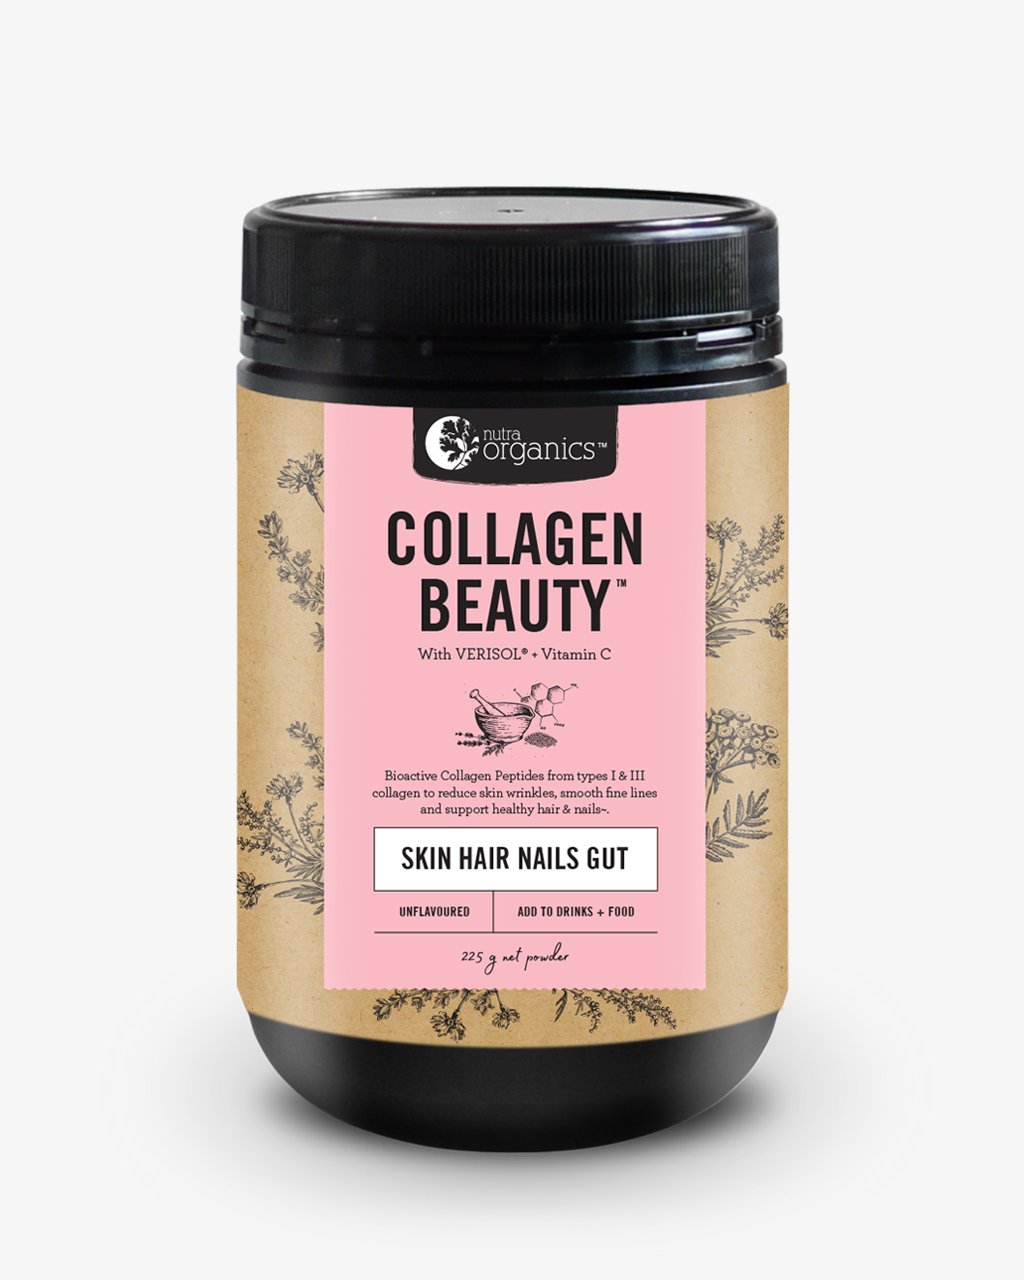 Collagen BeautyT